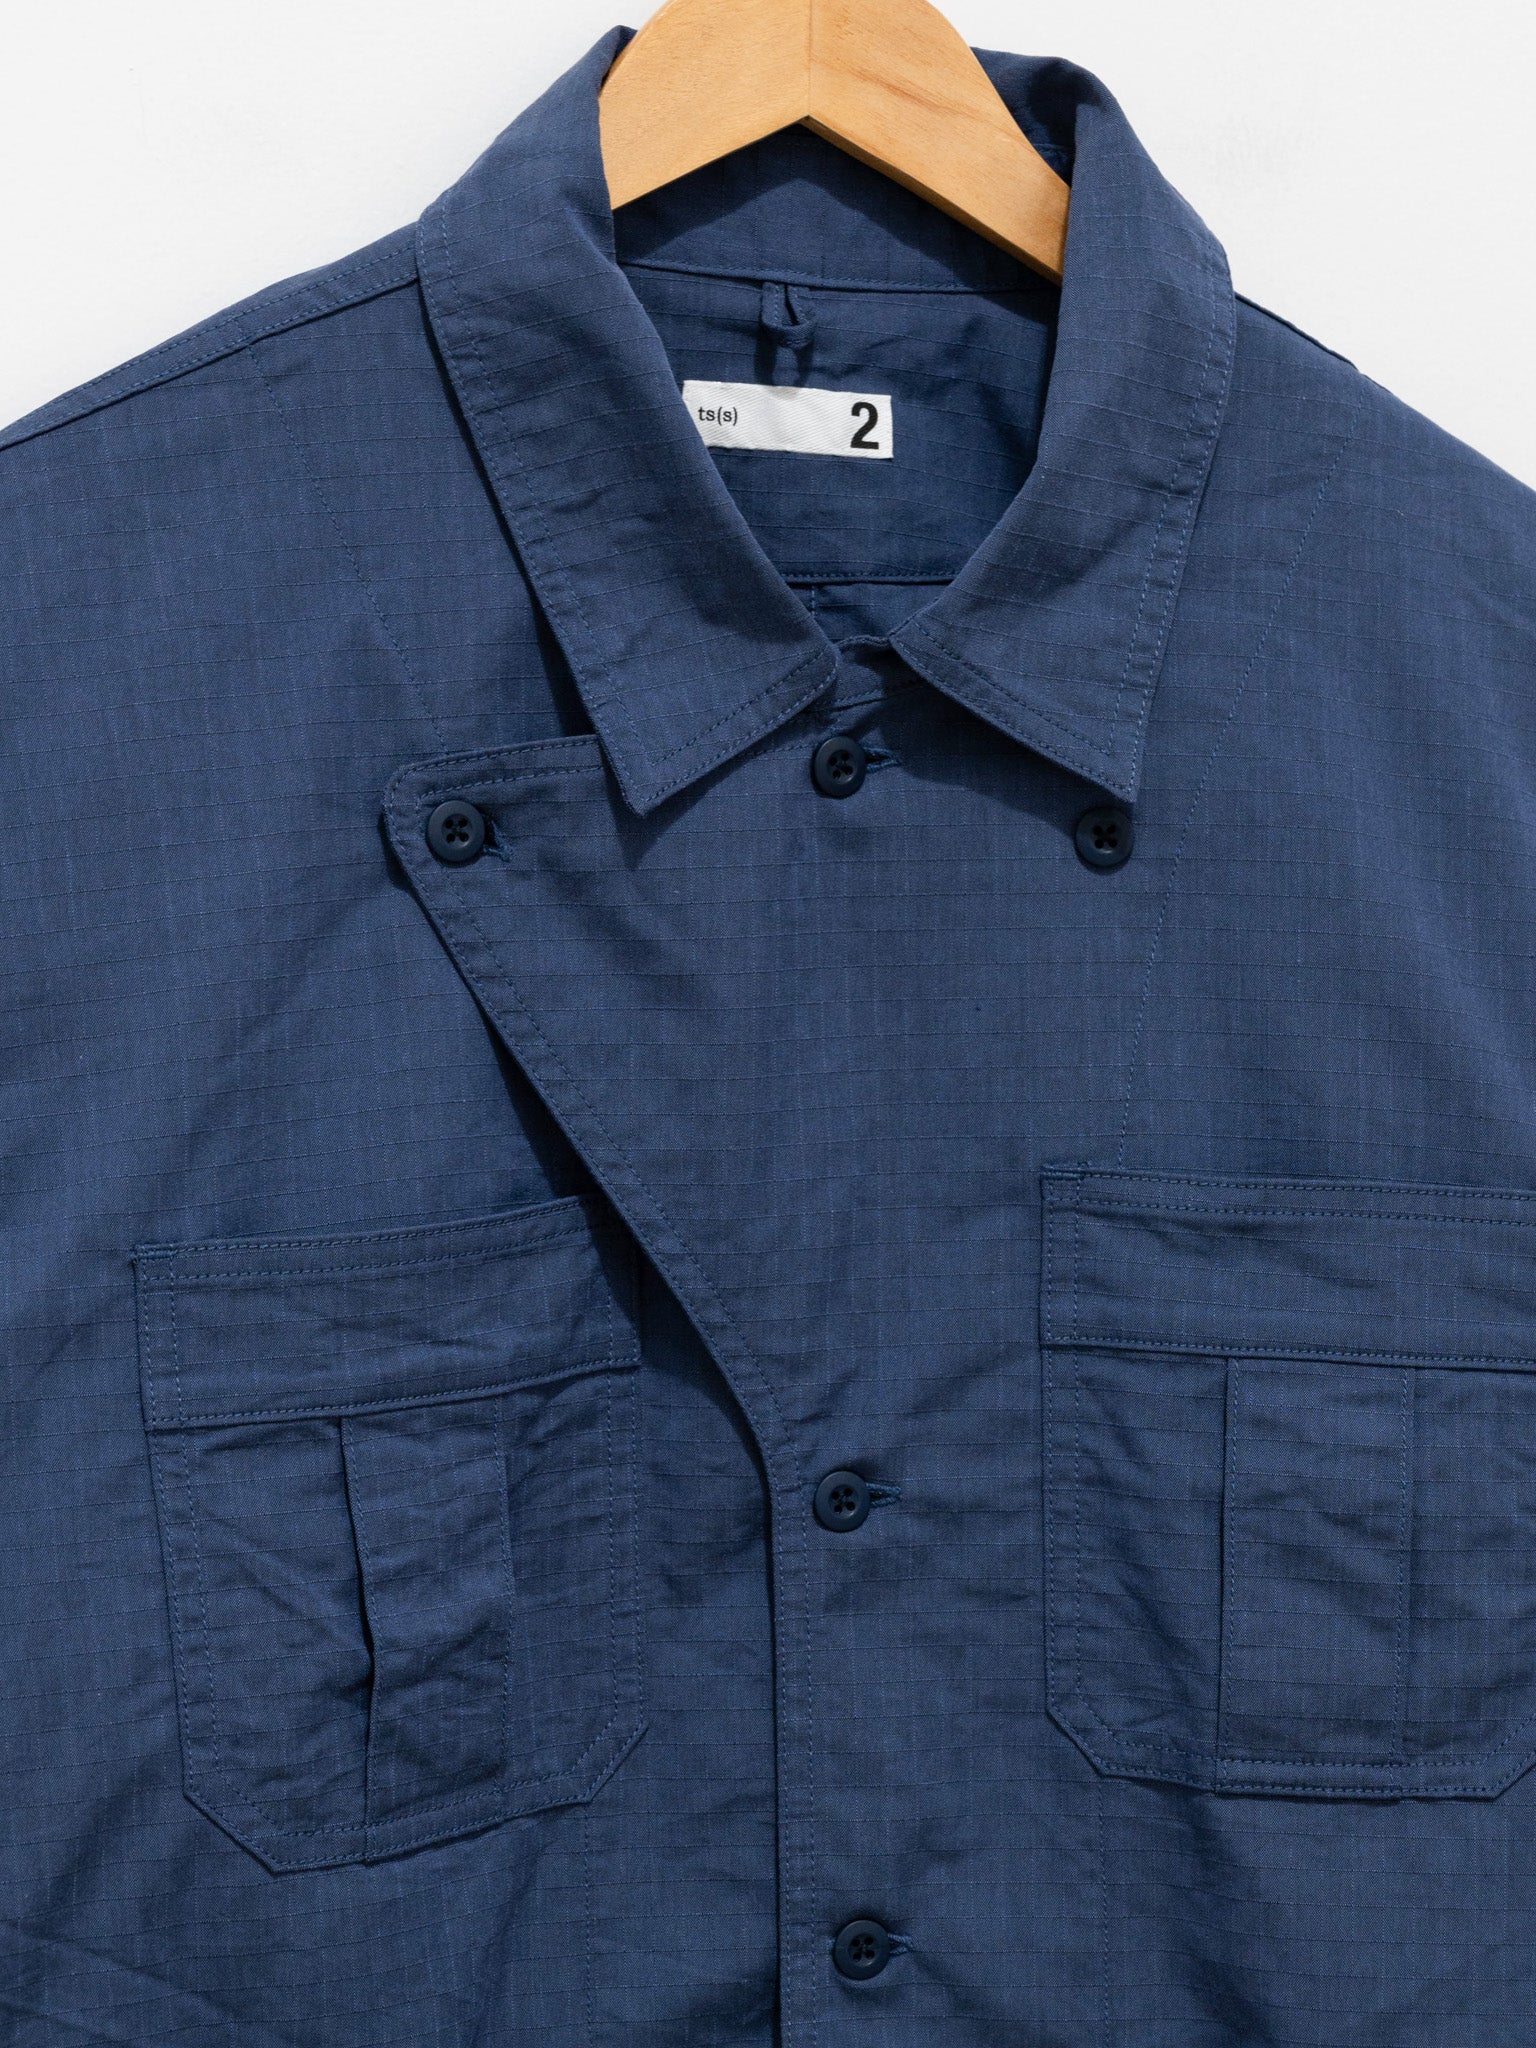 Namu Shop - ts(s) Ripstop Military Shirt Jacket - Blue